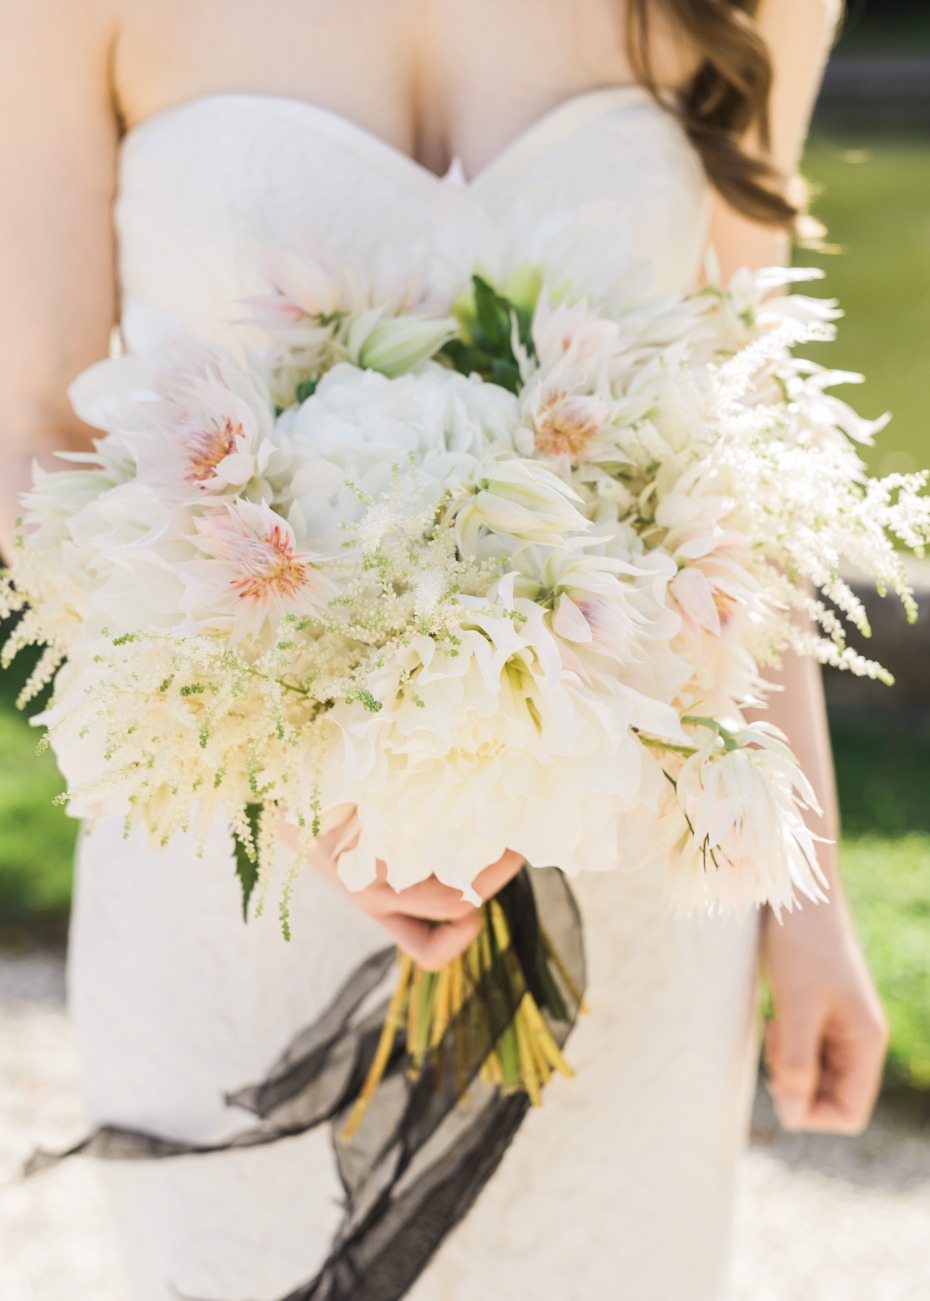 Soft wedding bouquet